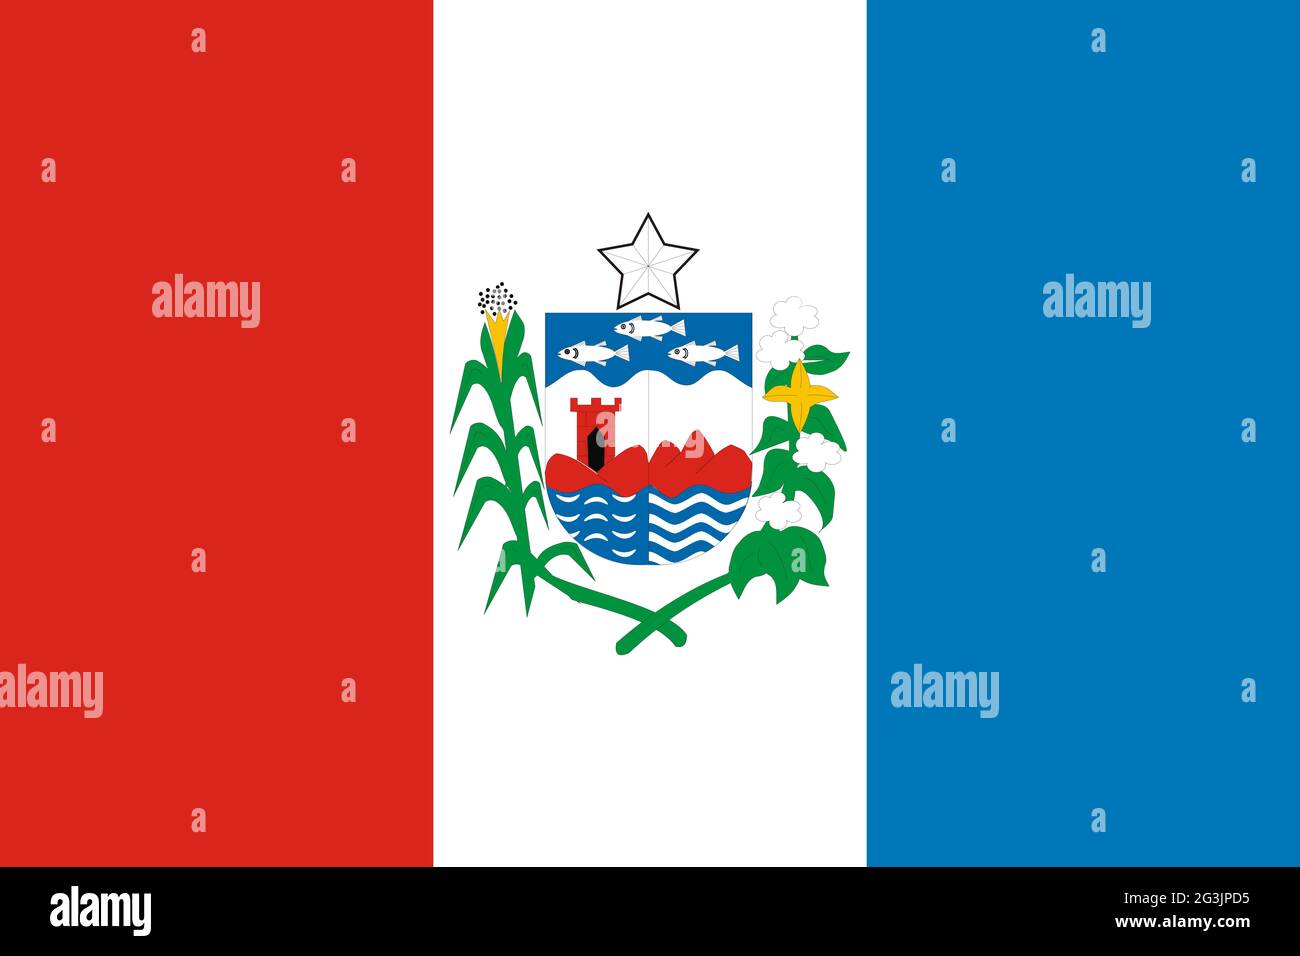 Grand drapeau plat officiel d'Alagoas horizontal Banque D'Images